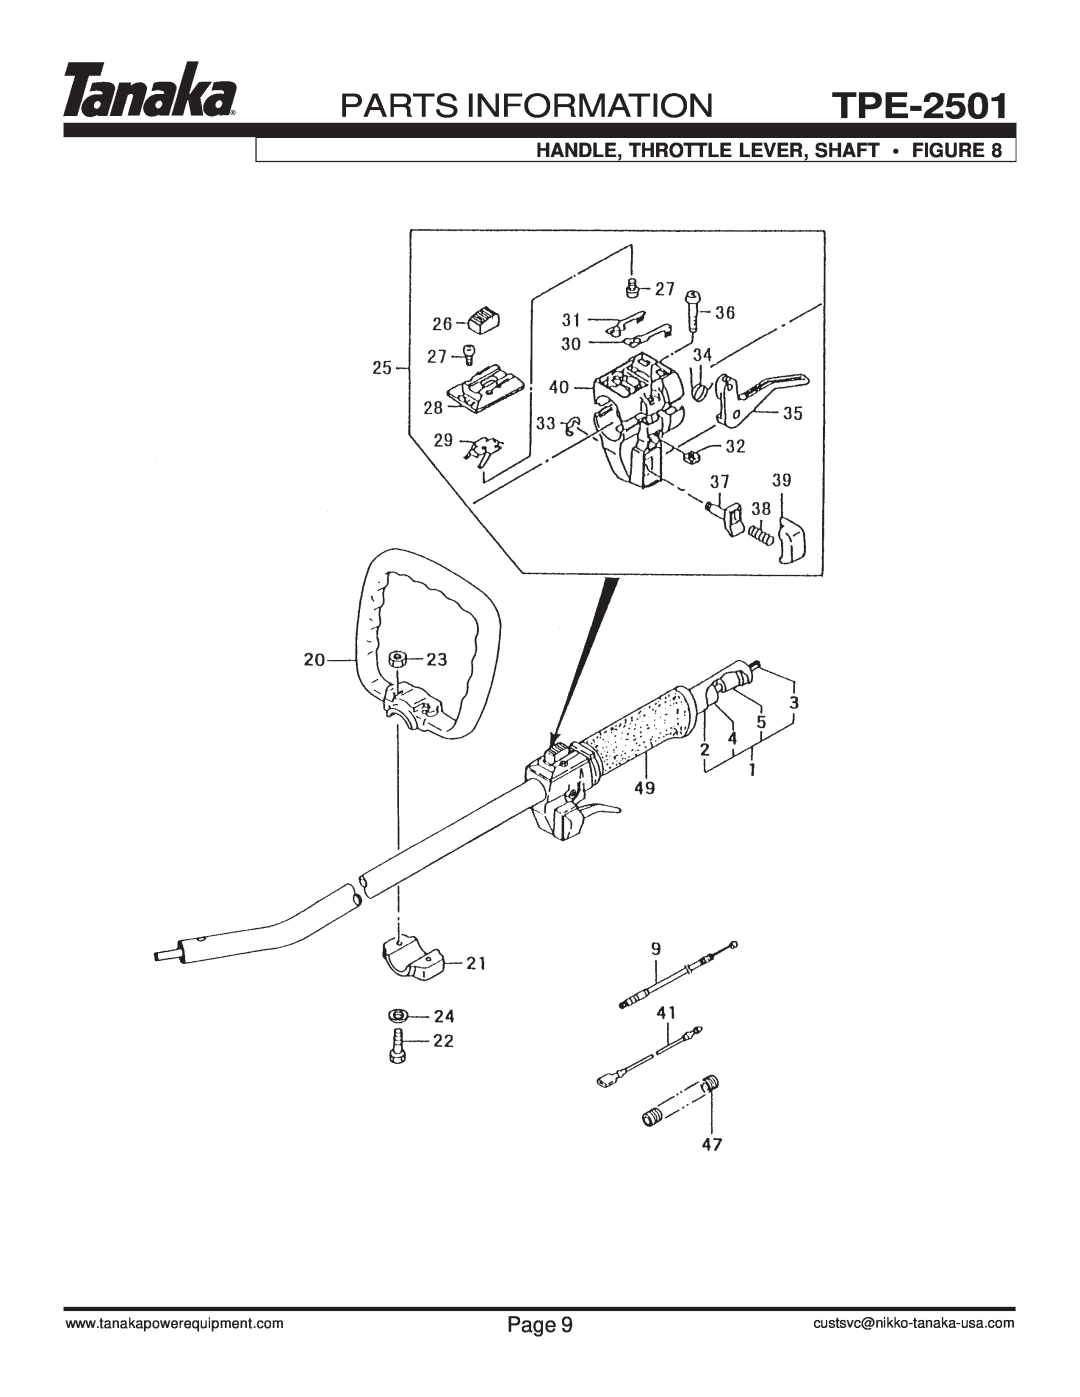 Tanaka TPE-2501 manual Parts Information, Handle, Throttle Lever, Shaft Figure, Page, custsvc@nikko-tanaka-usa.com 